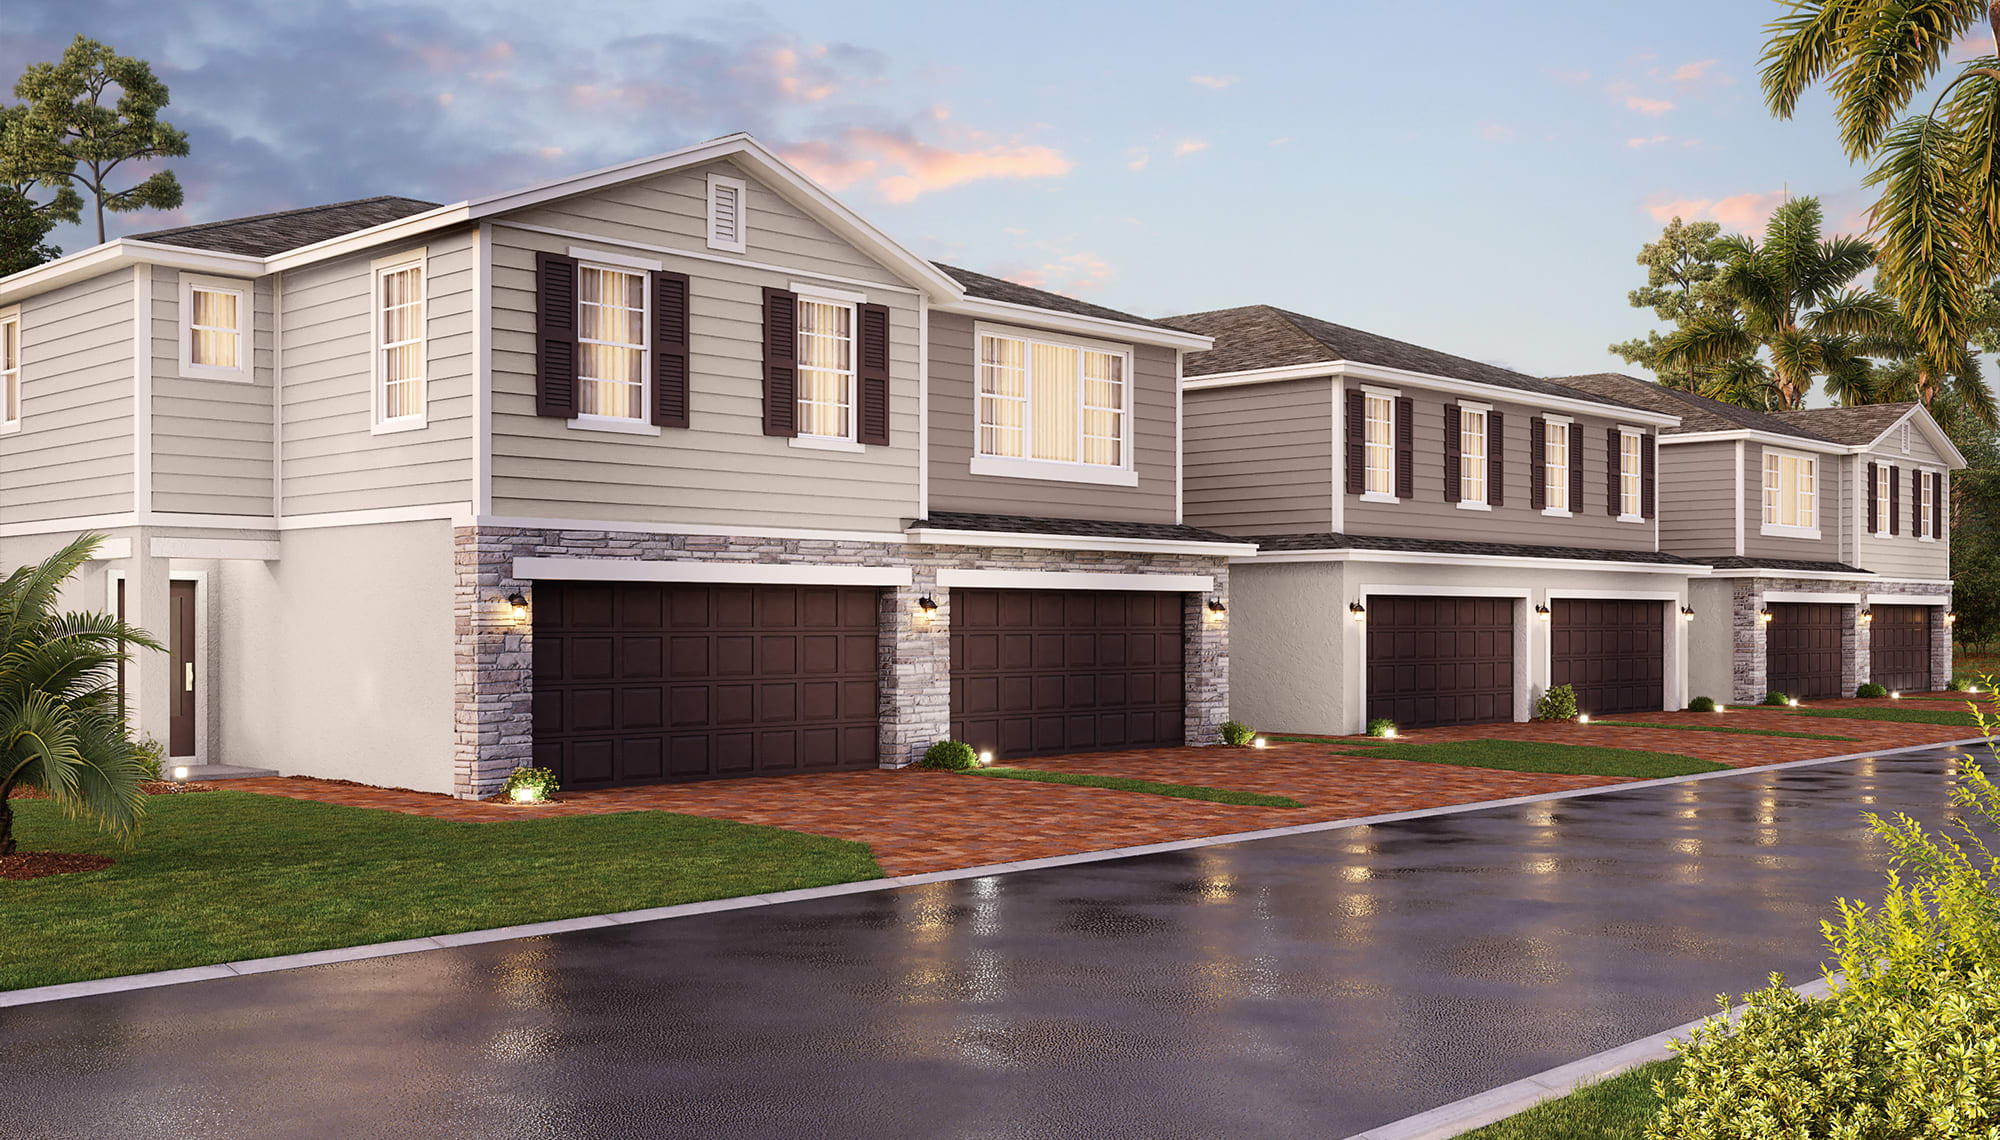 New Homes at Thompson Village in Apopka, FL